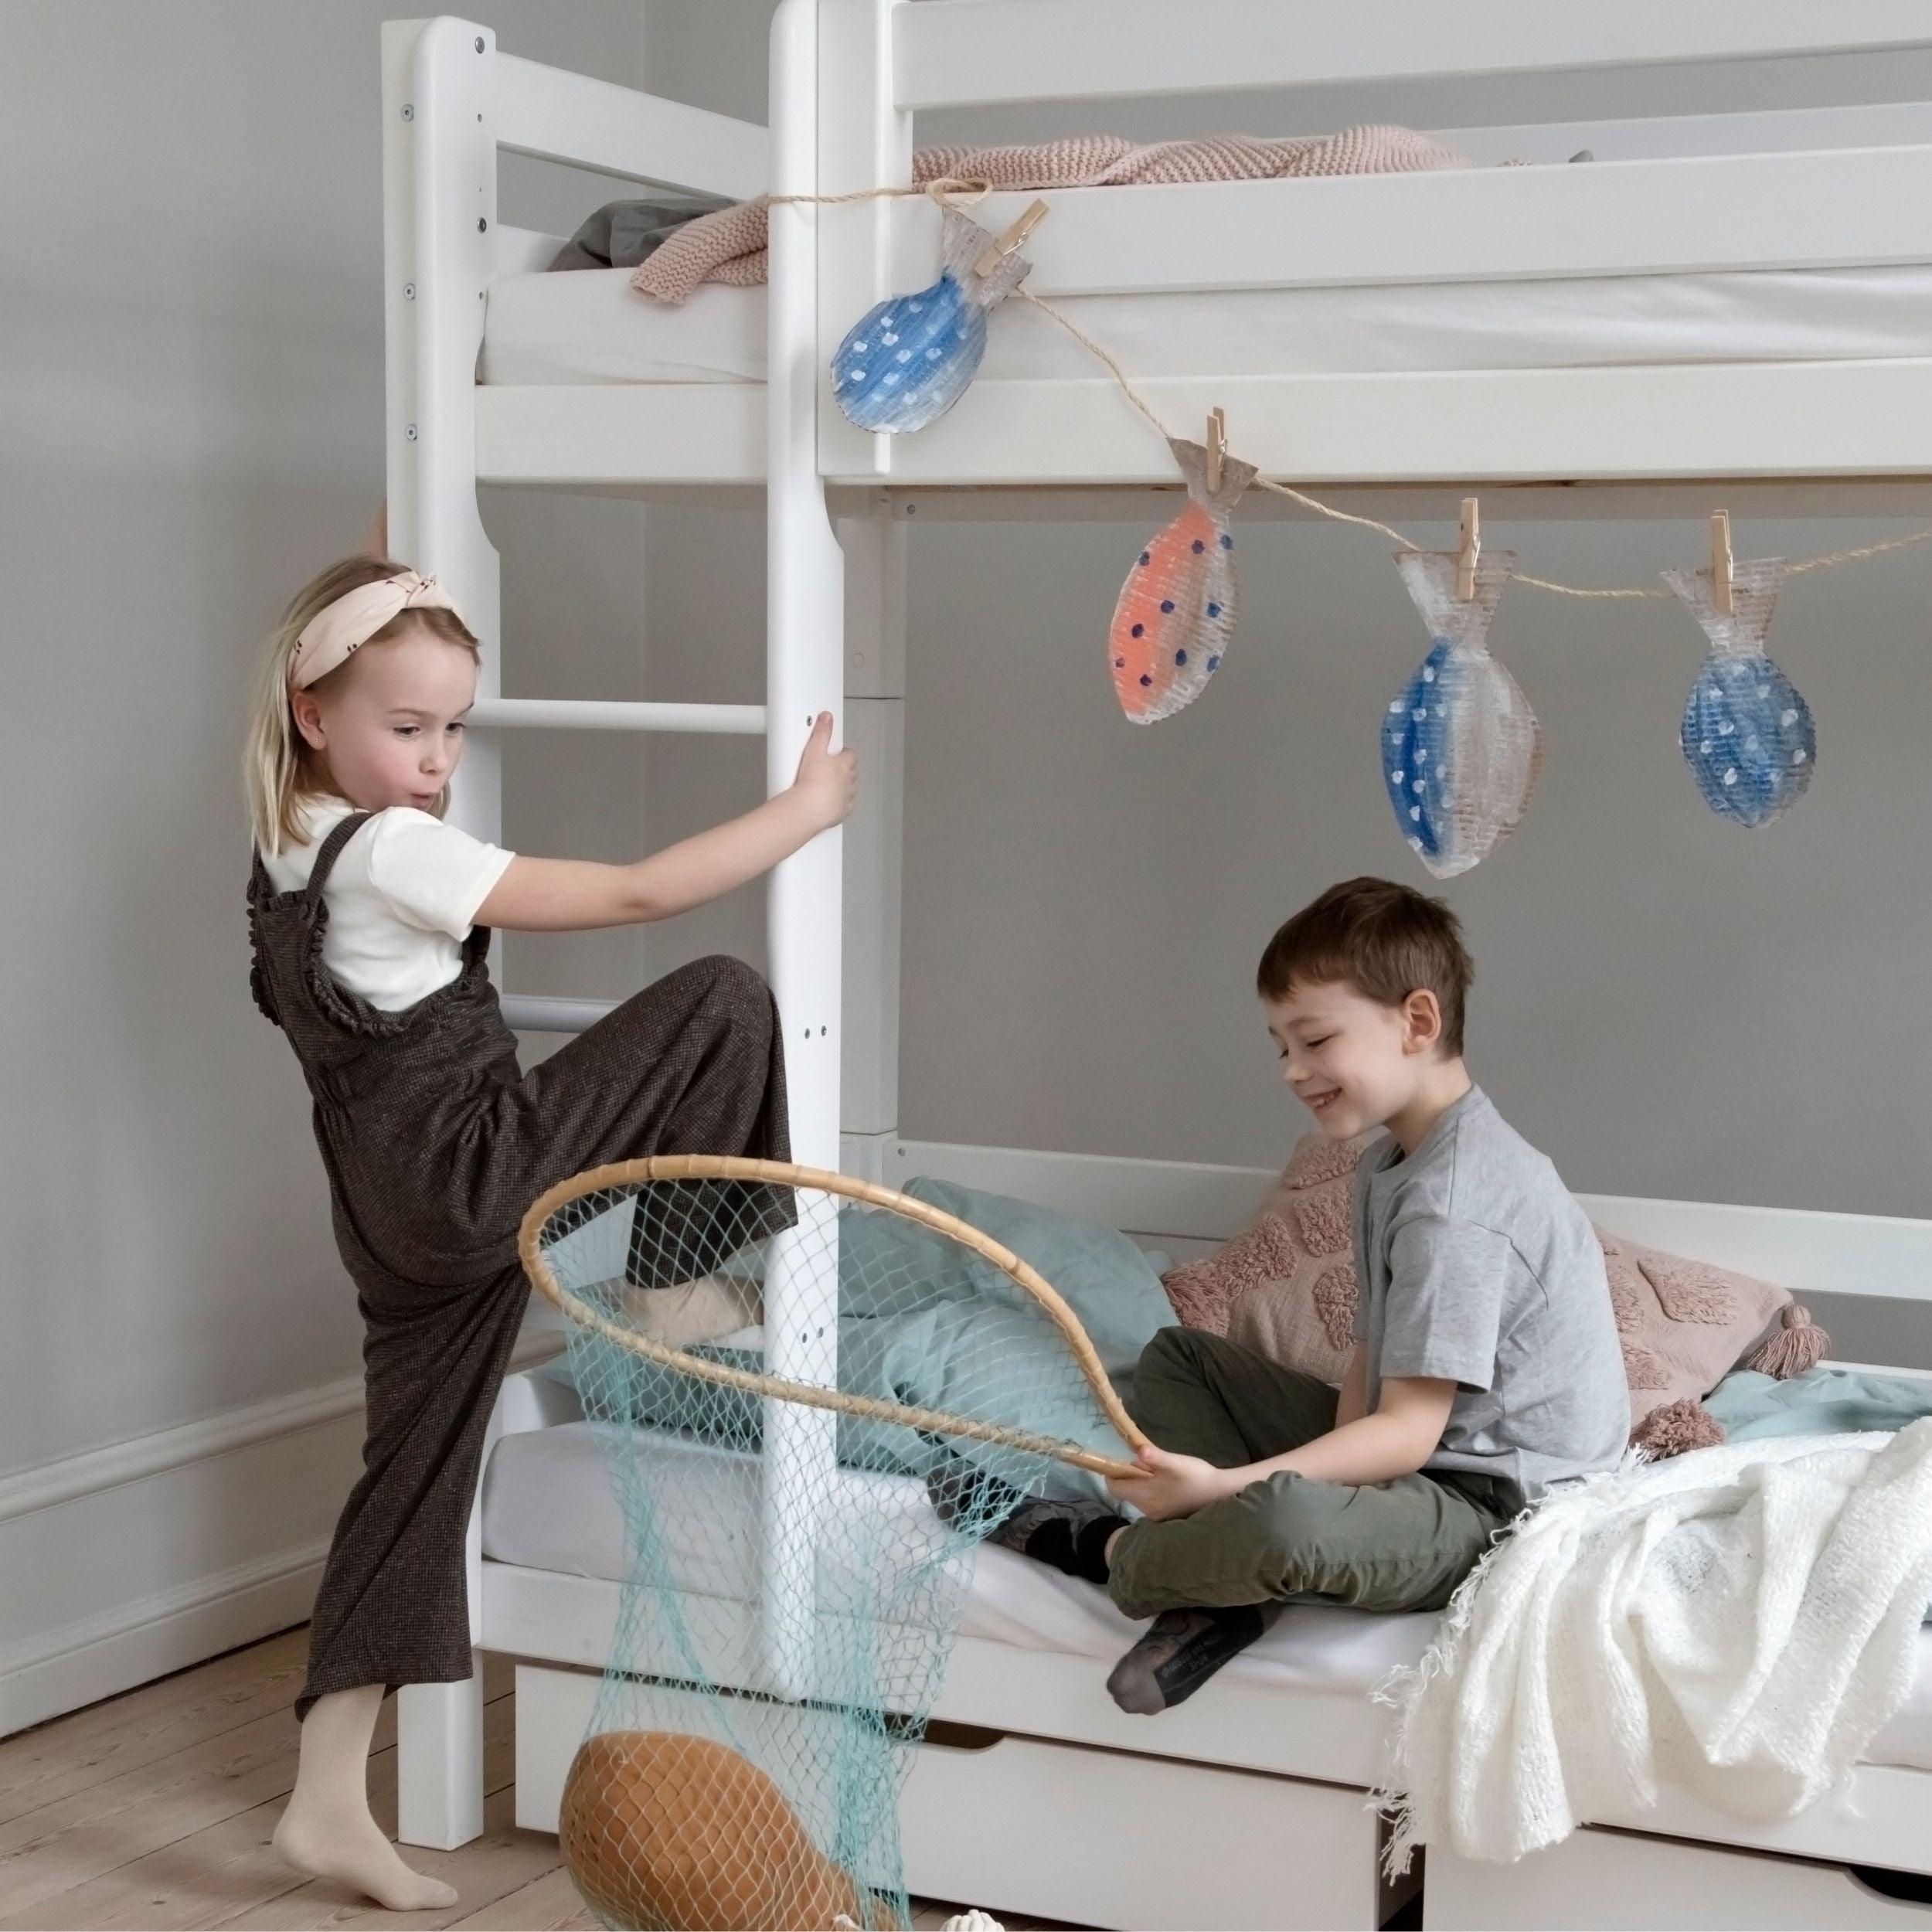 Hoppekids ECO Luxury ladder for High Bunk Bed